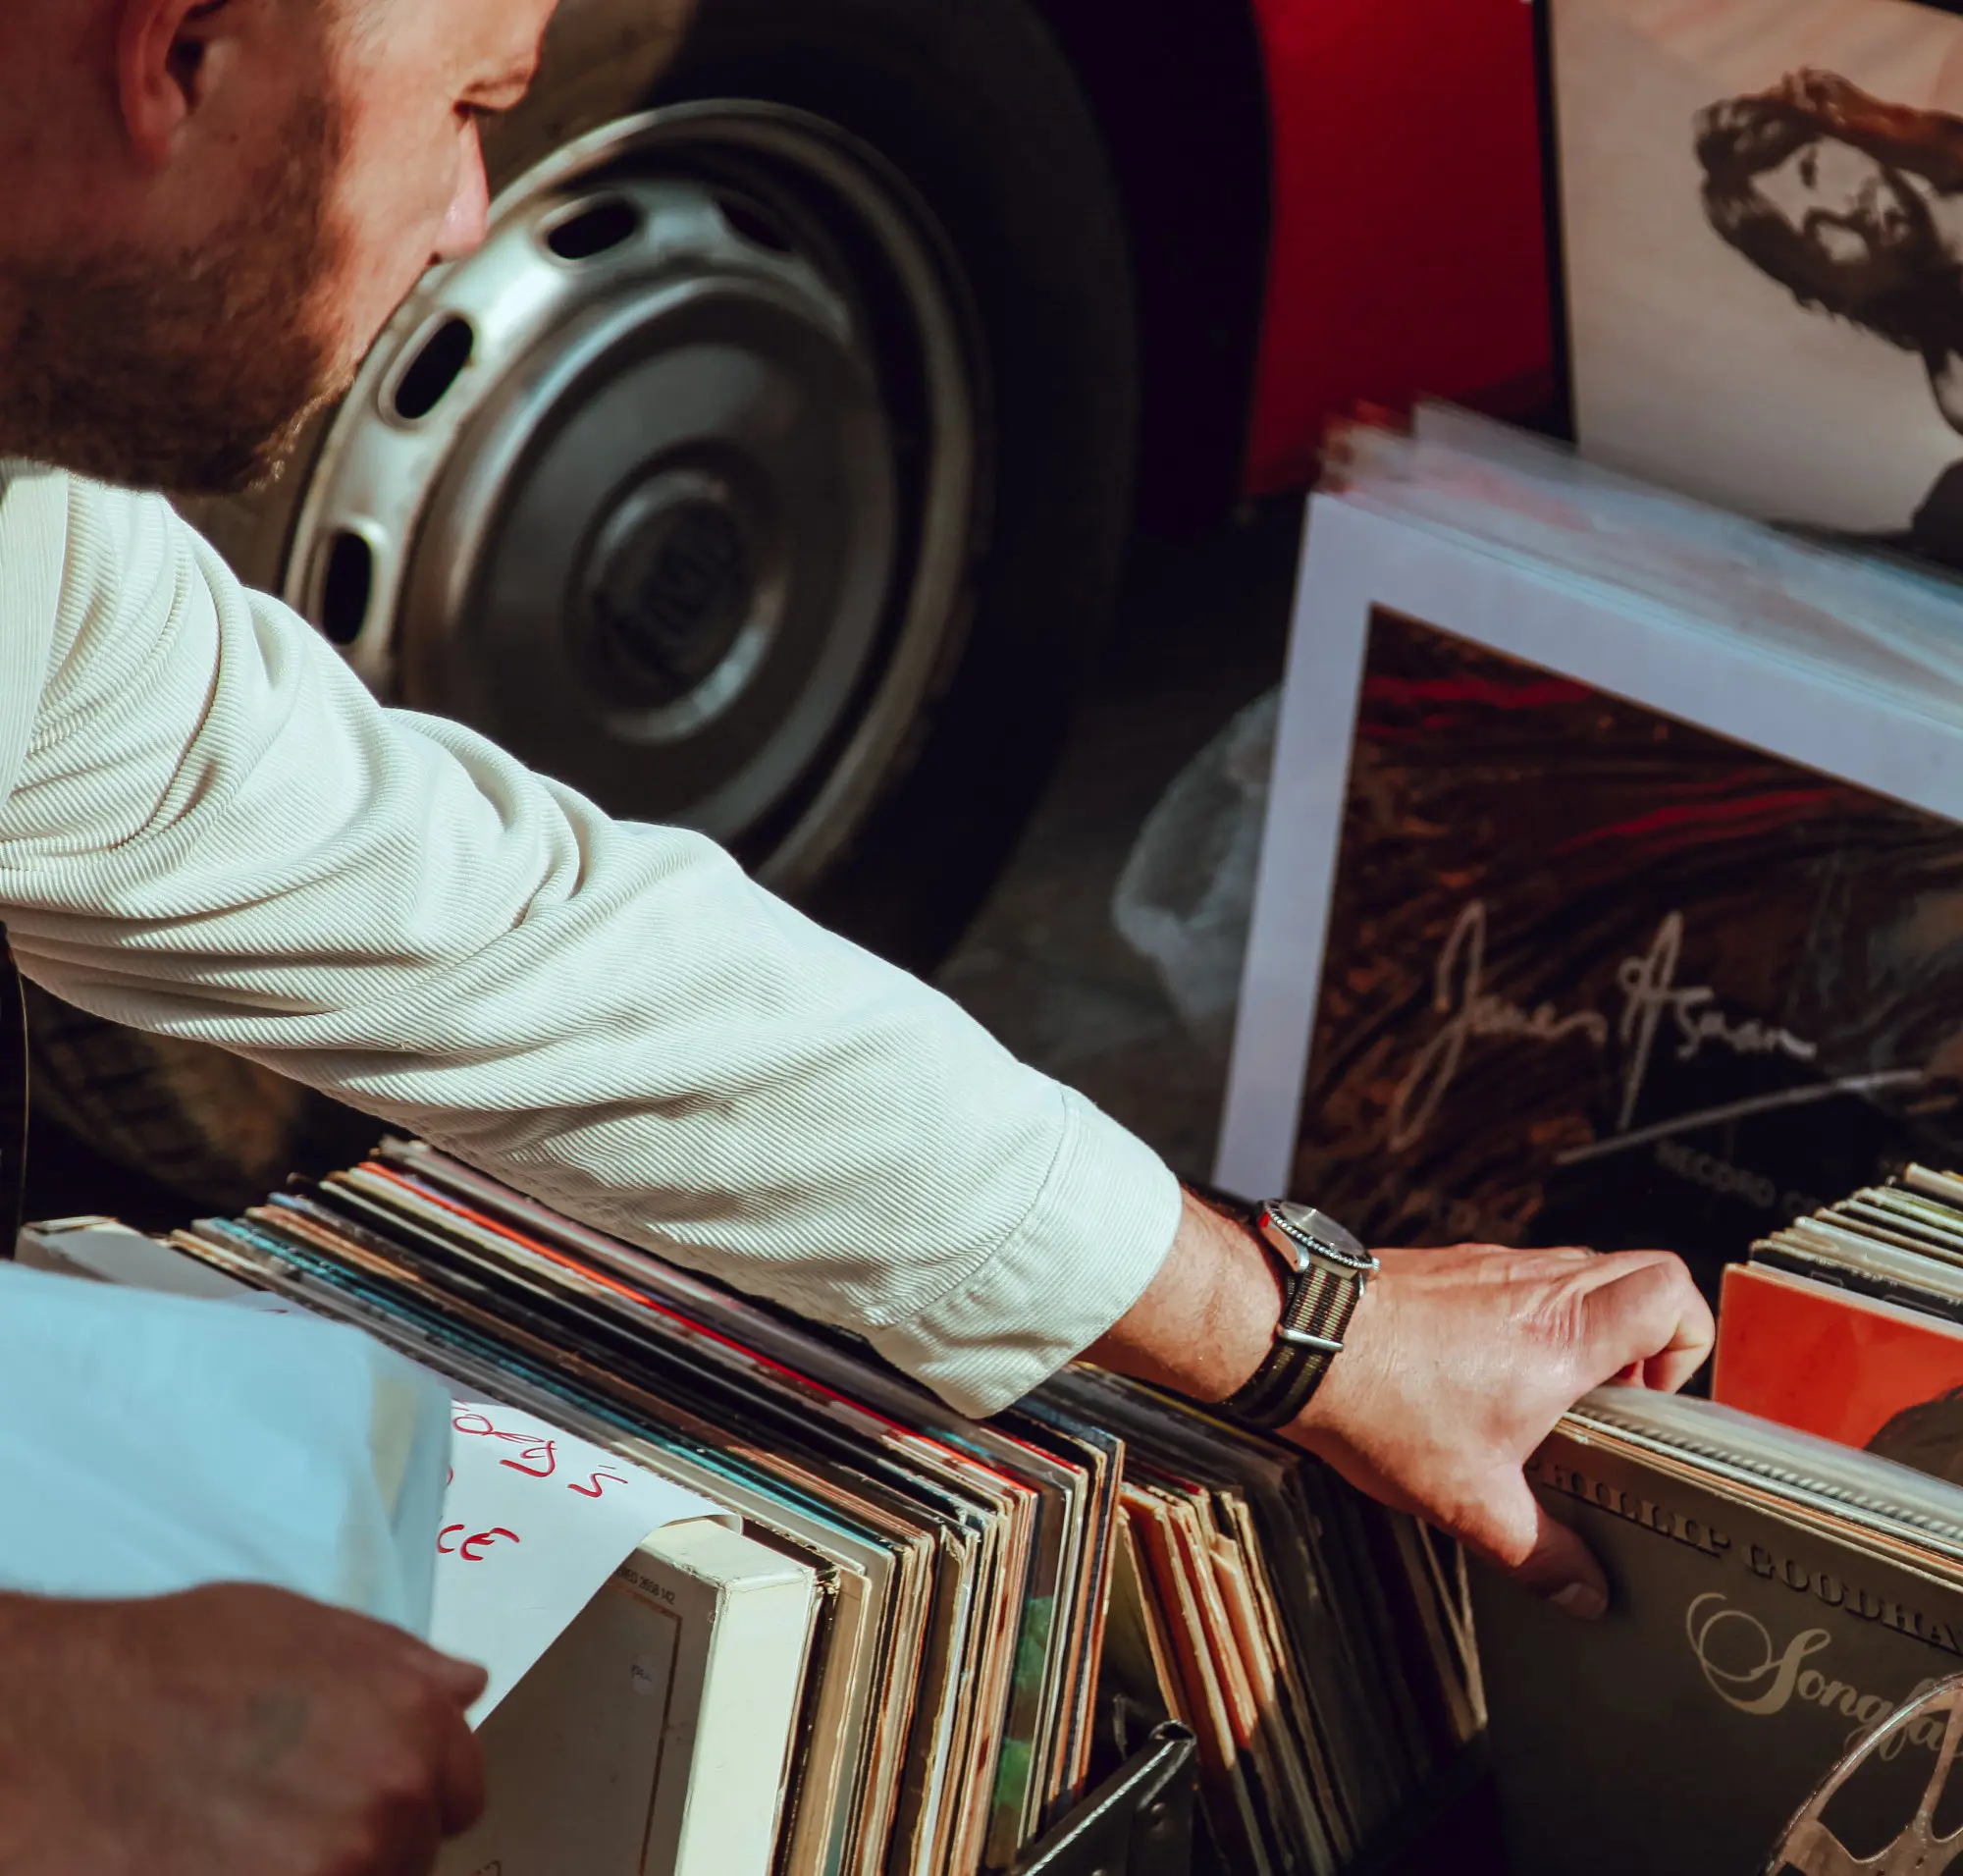 Man searching through vinyl records